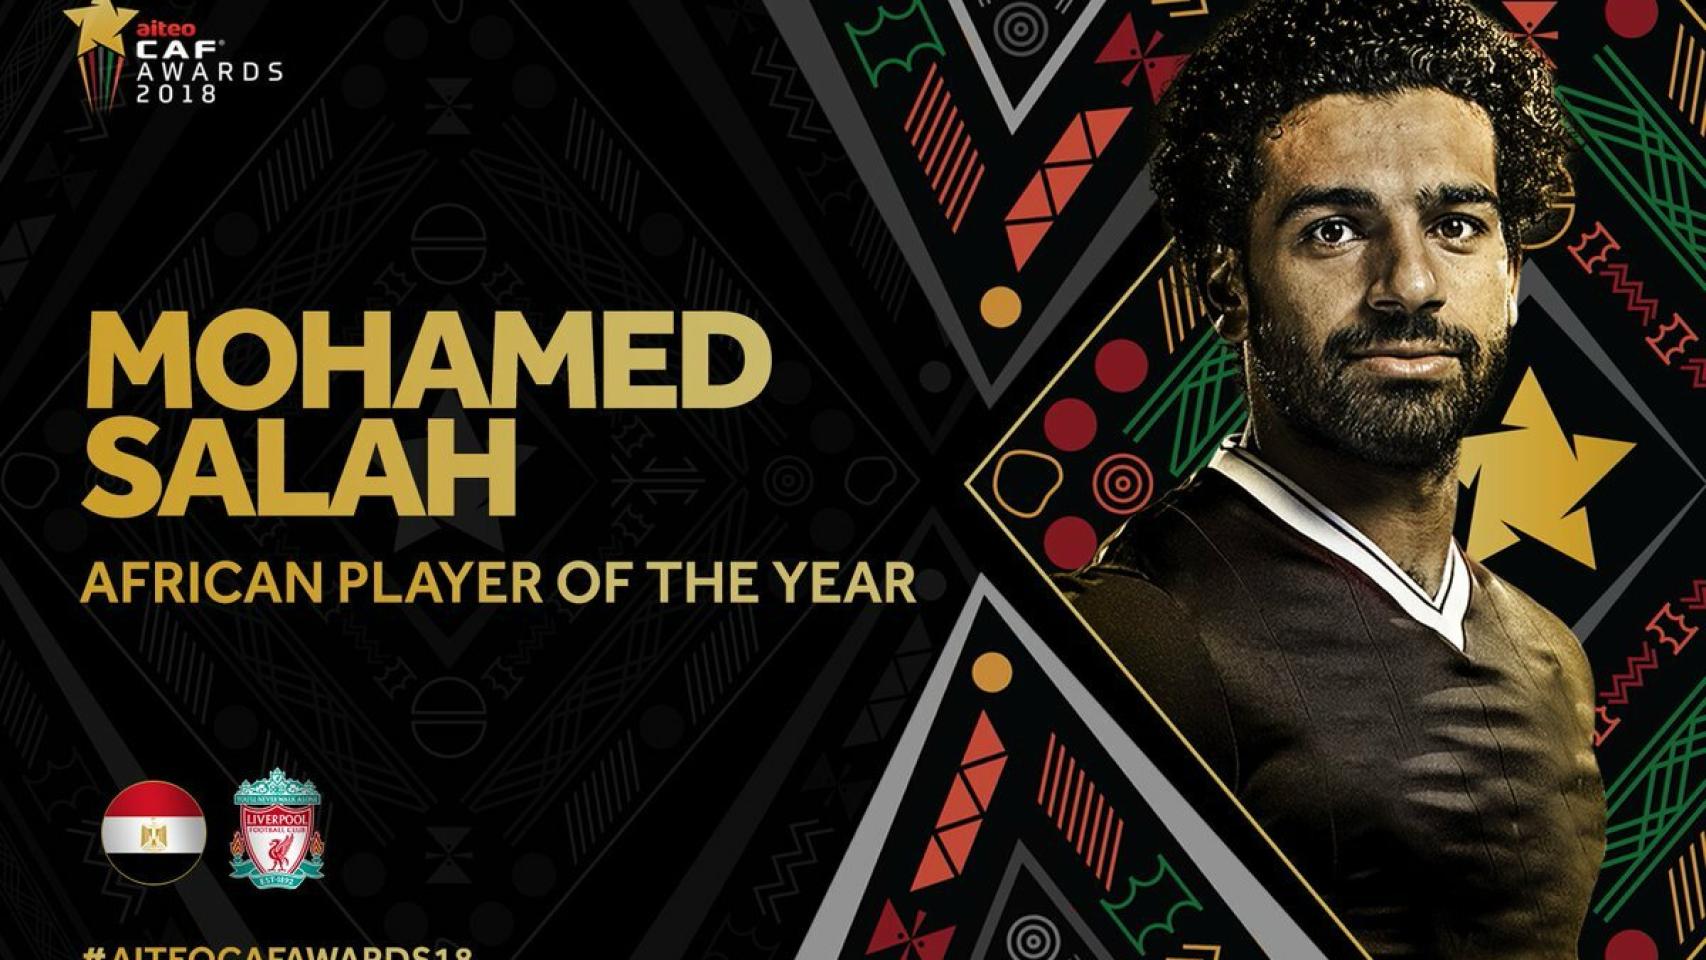 Mohamed Salah, mejor futbolista africano del 2018. Foto: Twitter (@chirichampions)